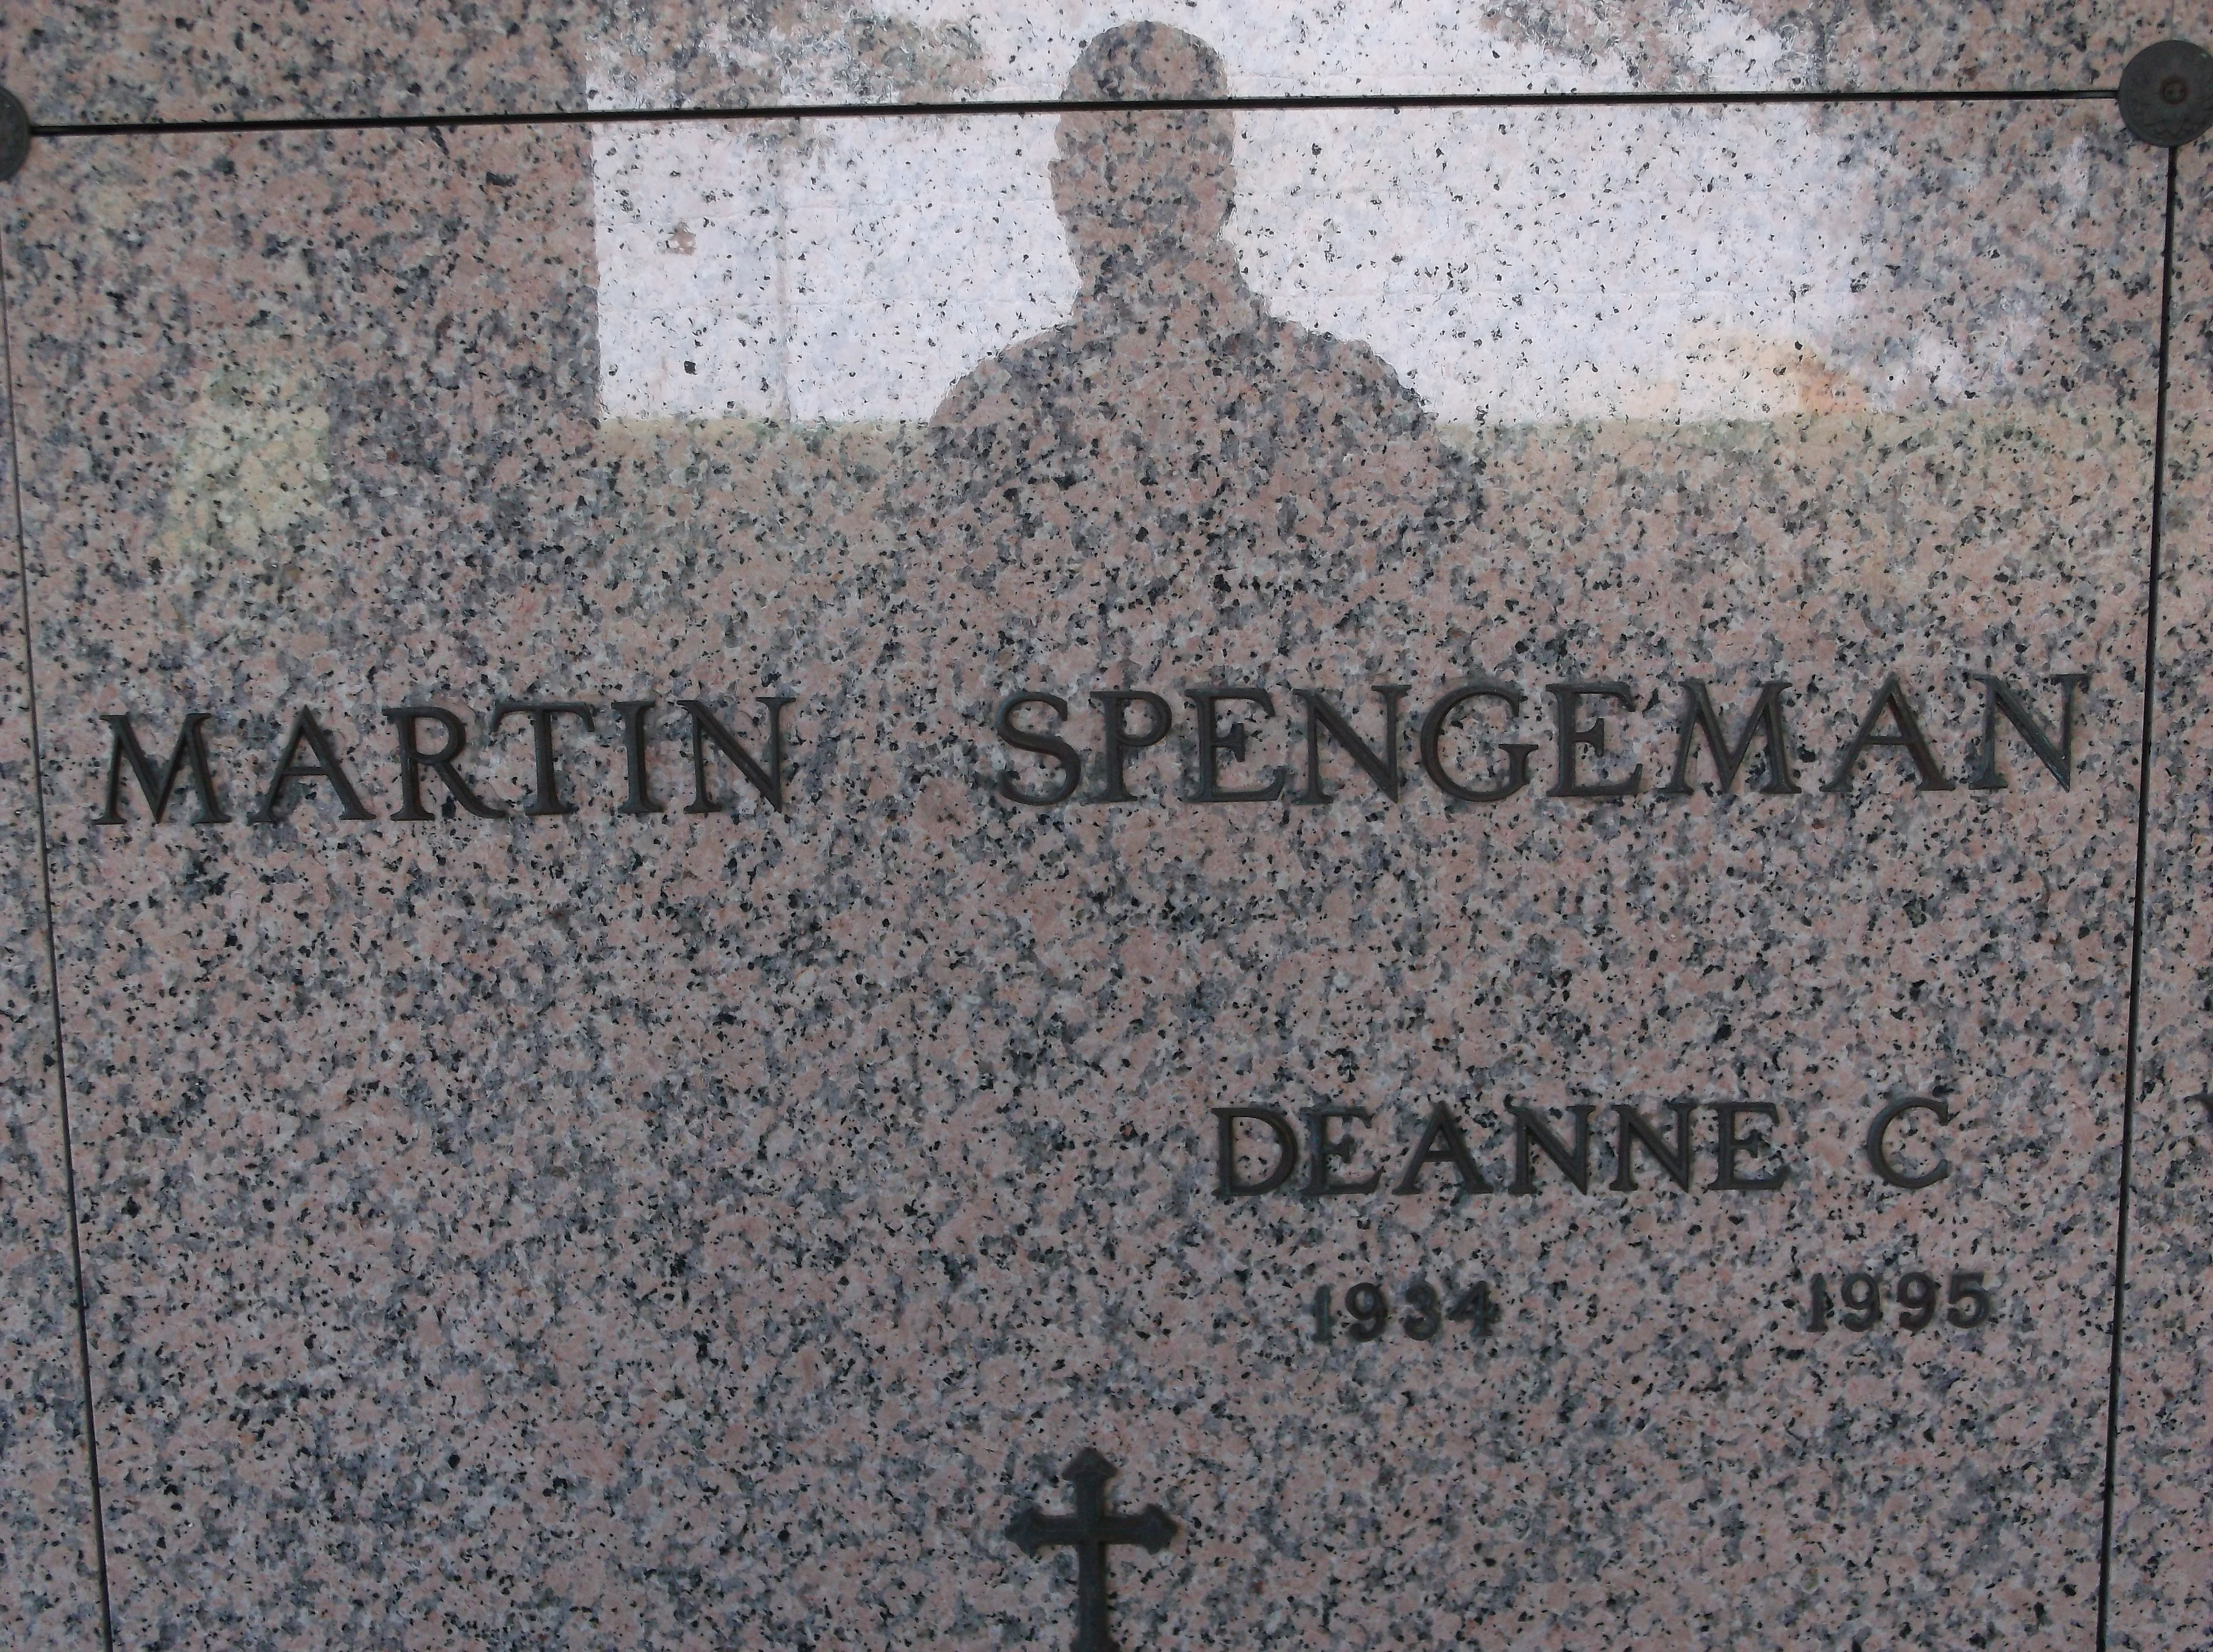 Deanne C Martin Spengeman